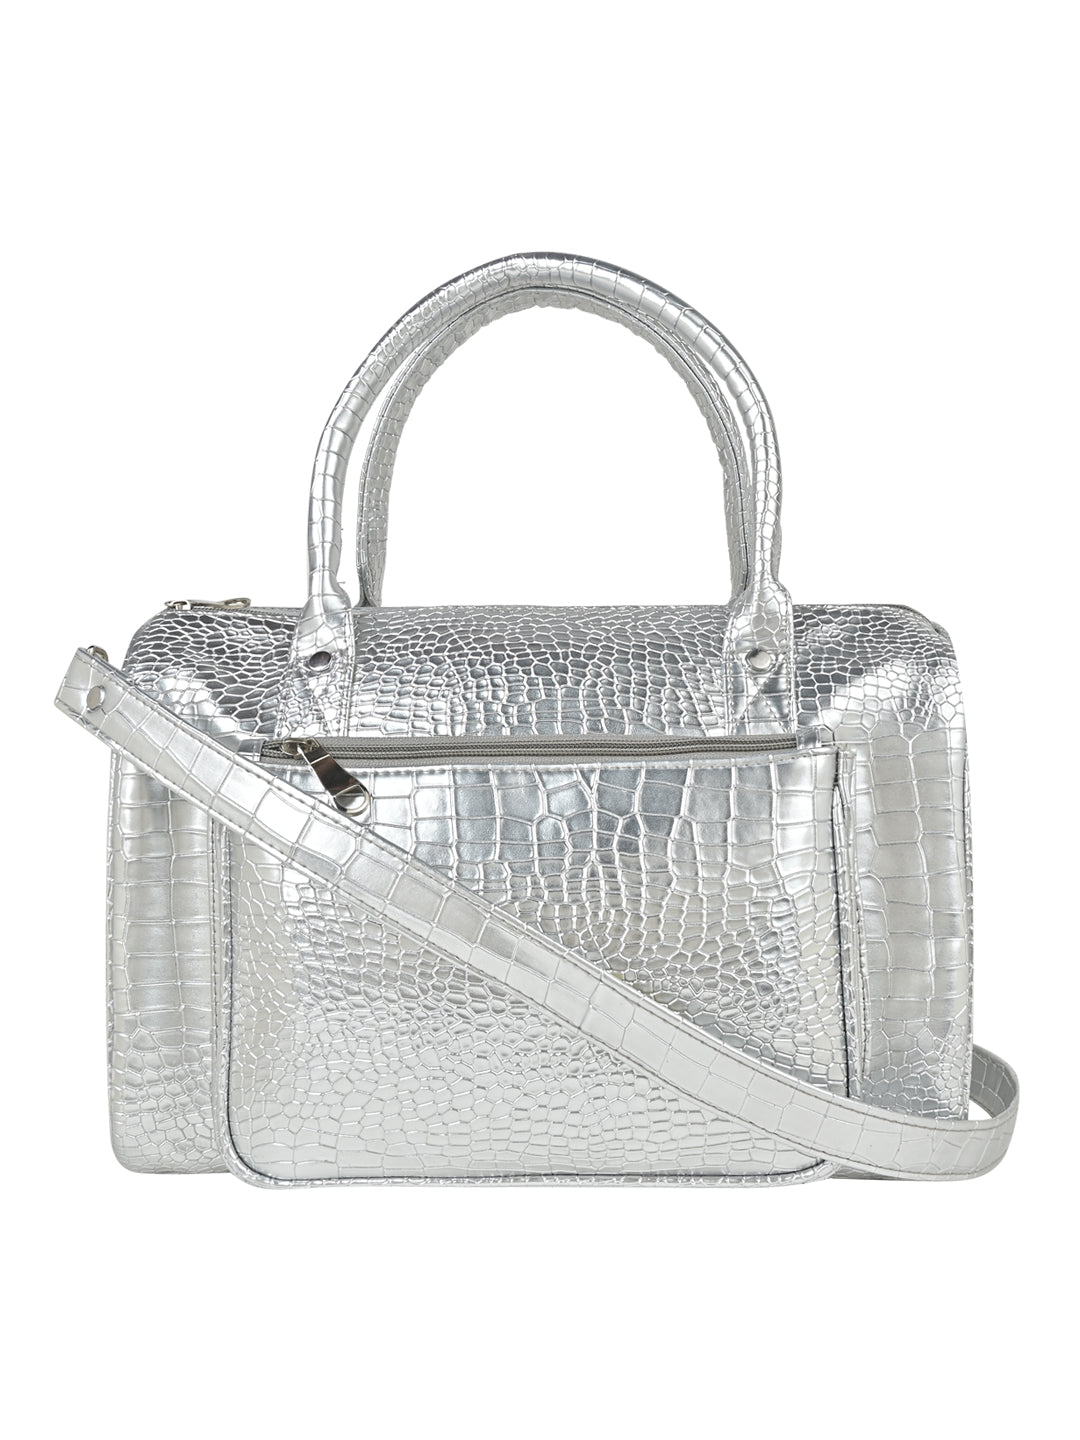 A silver ladies bag on plain white background. 